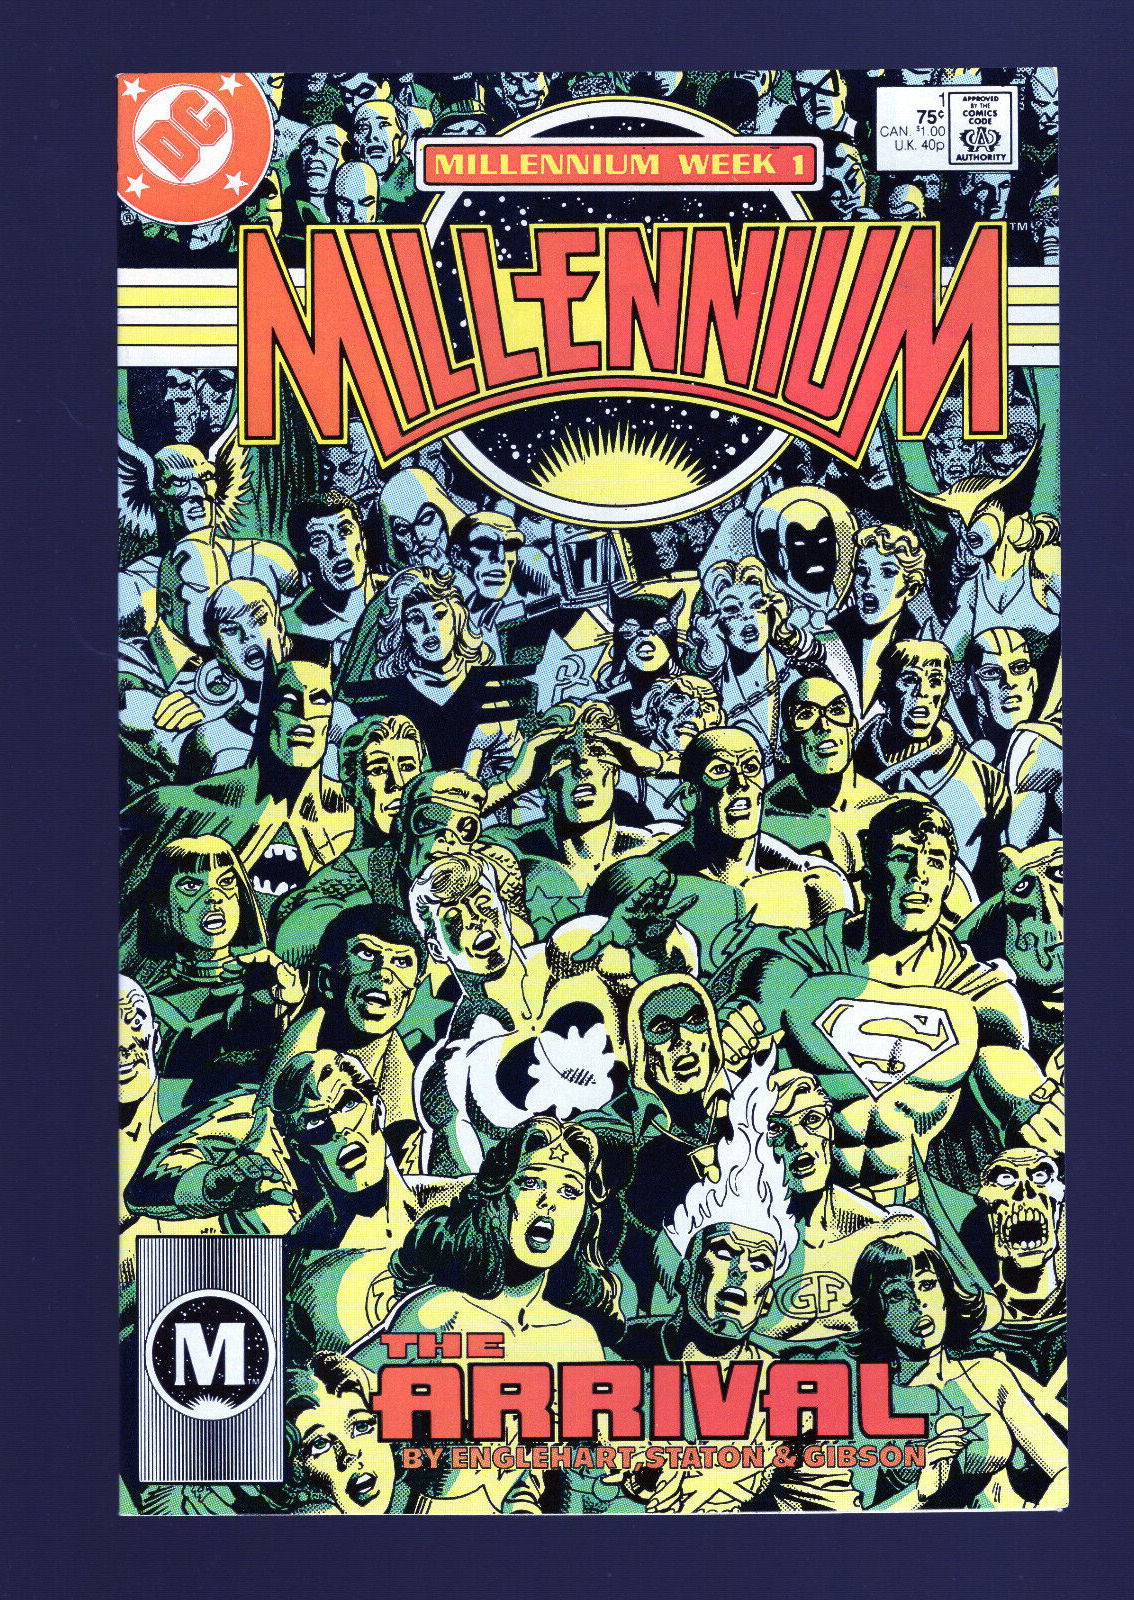 Millennium #1 - Joe Staton Cover Art. Steve Englehart Story. (9.2) 1988